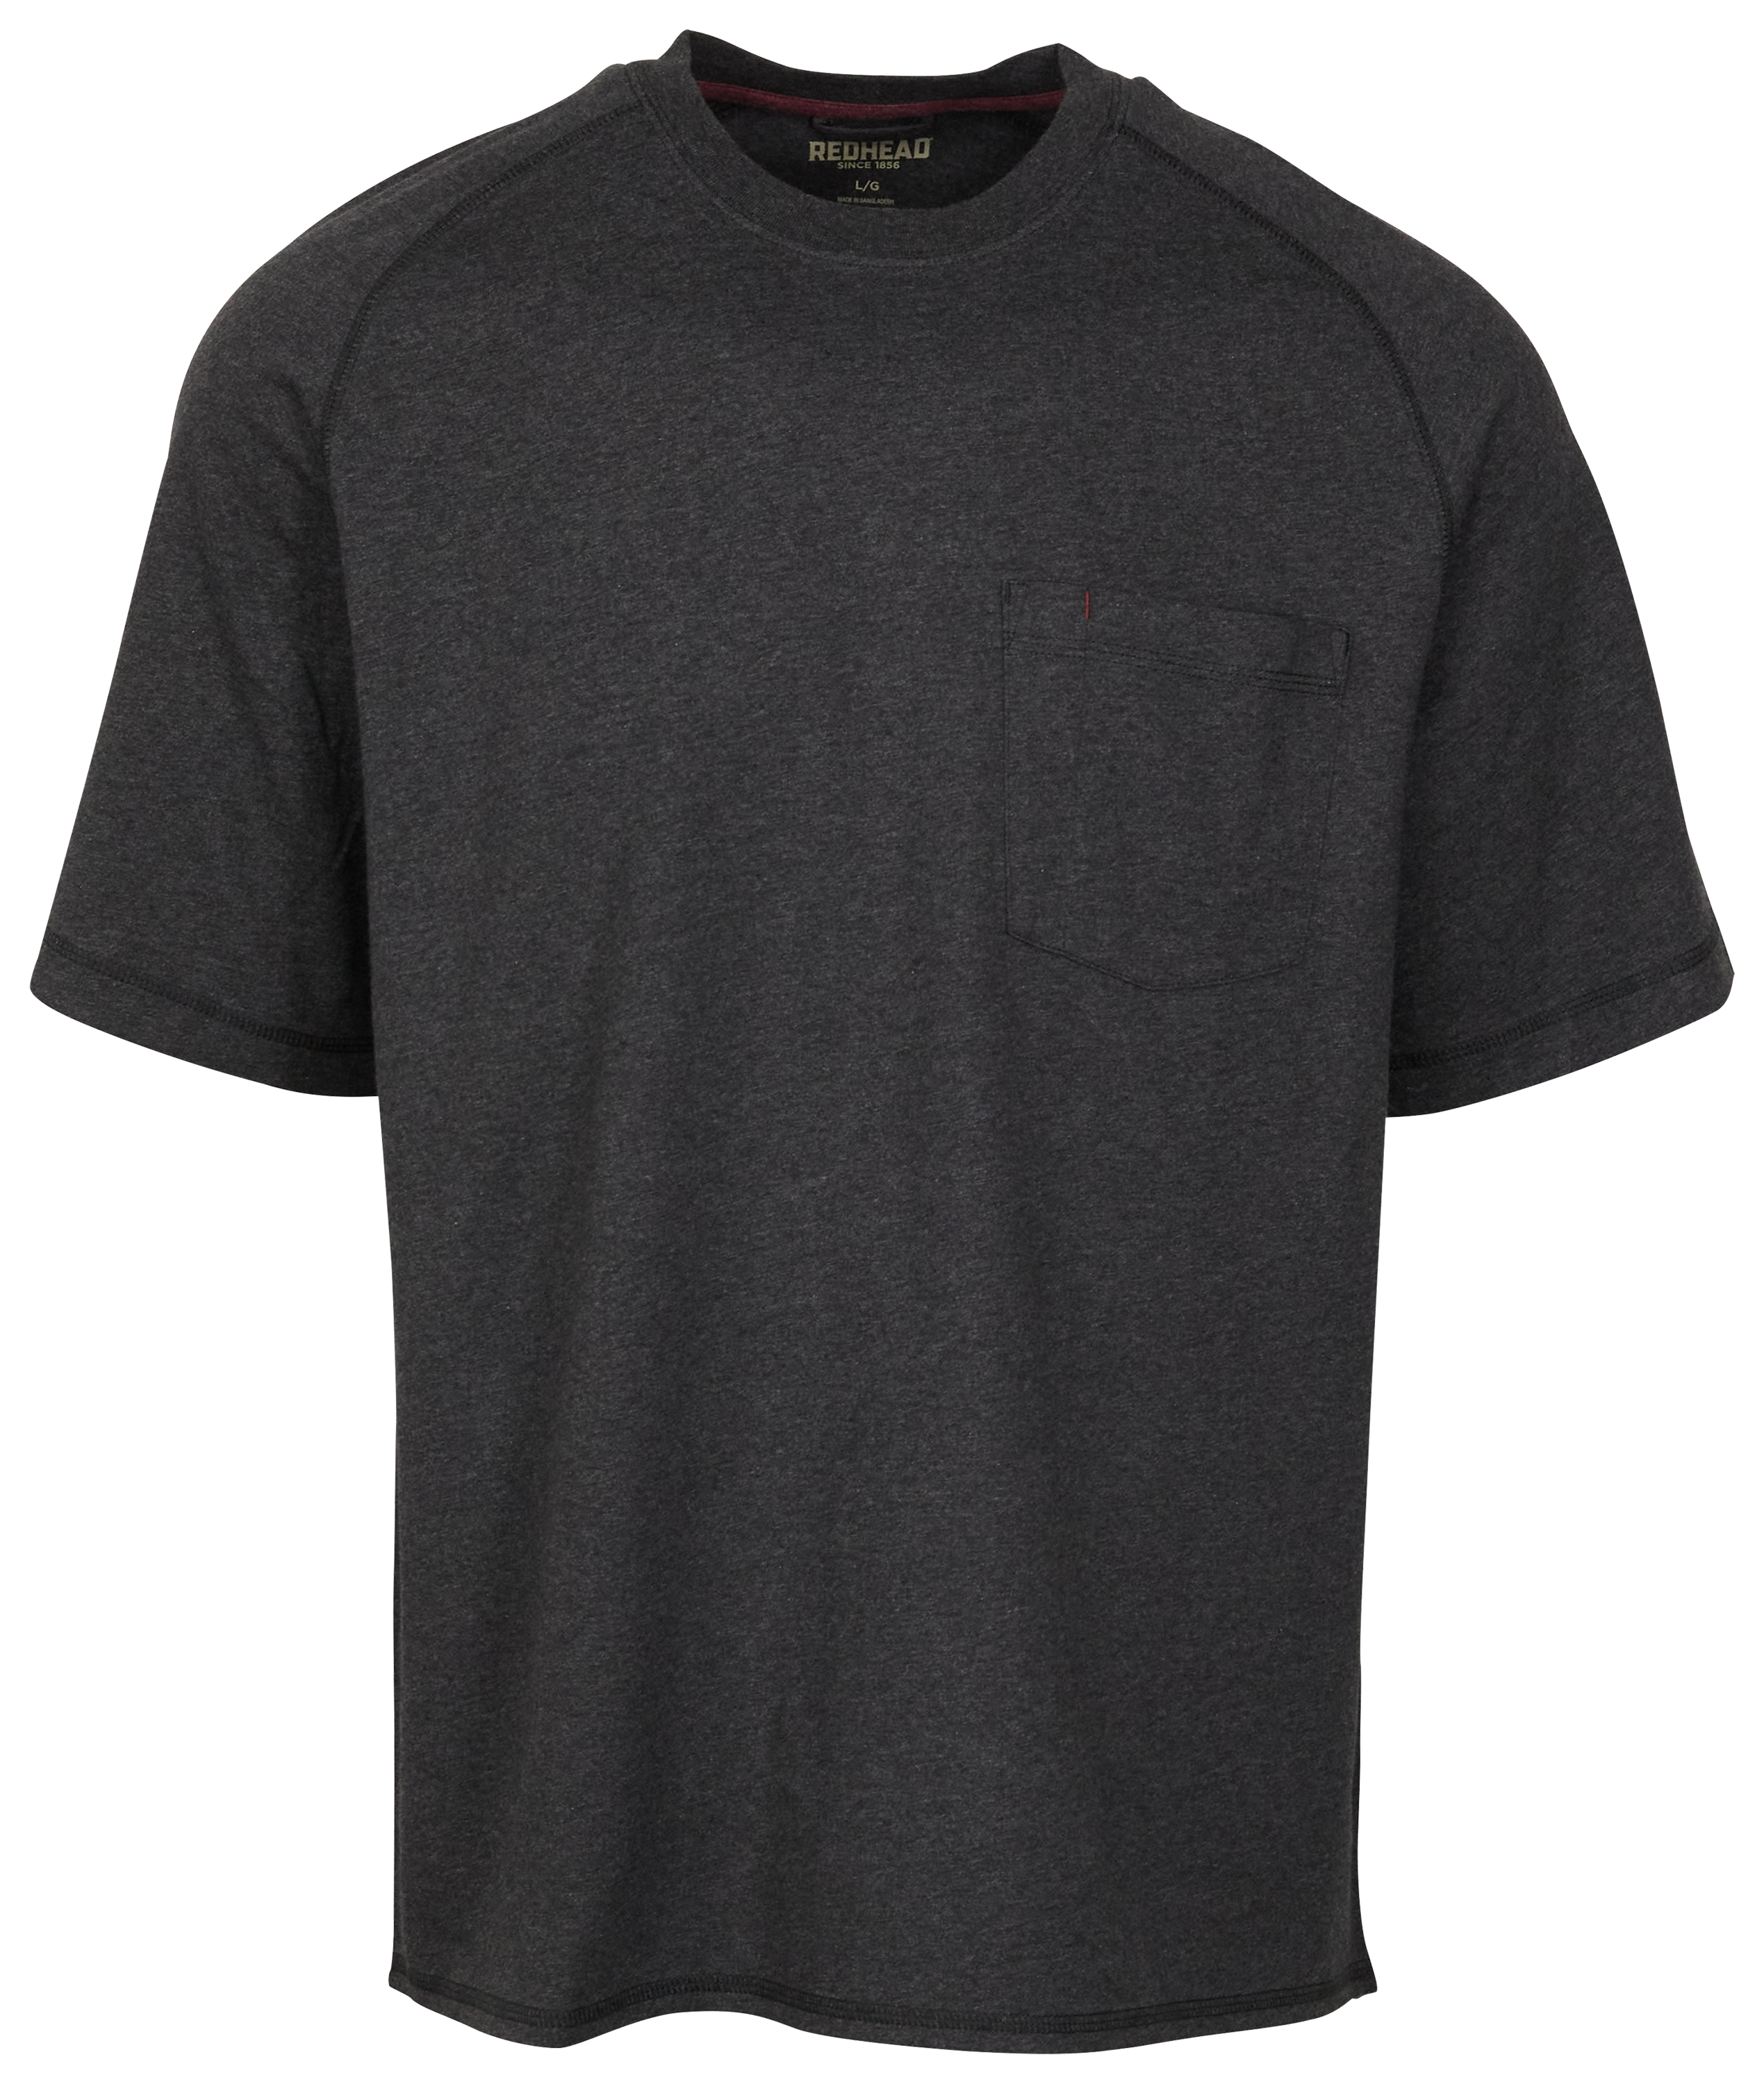 RedHead Pro Series Pocket Tech Short-Sleeve Shirt for Men